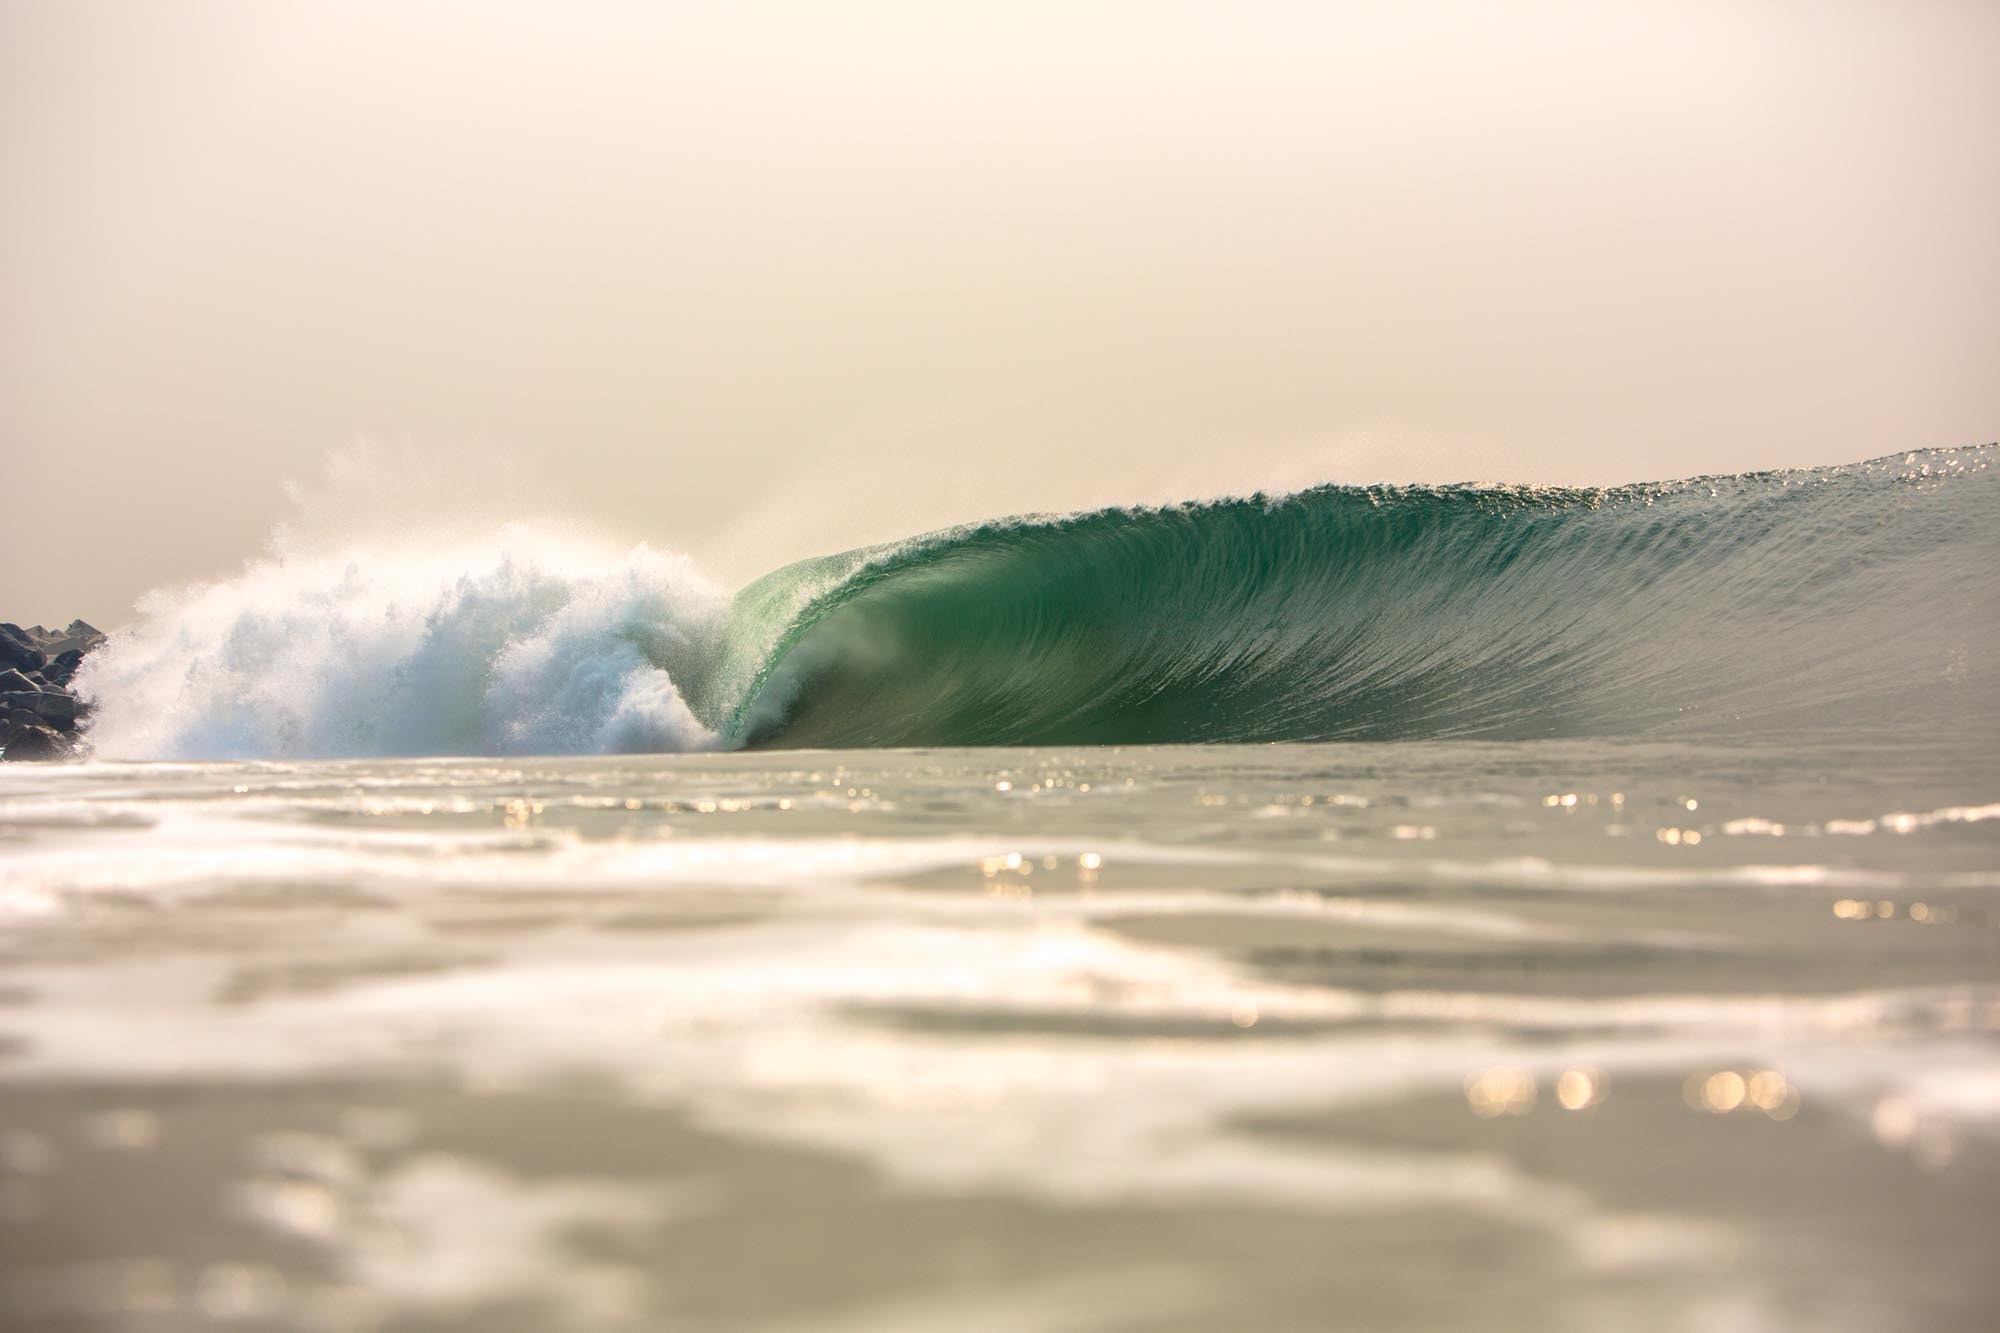 tarkwa bay waves in nigeria